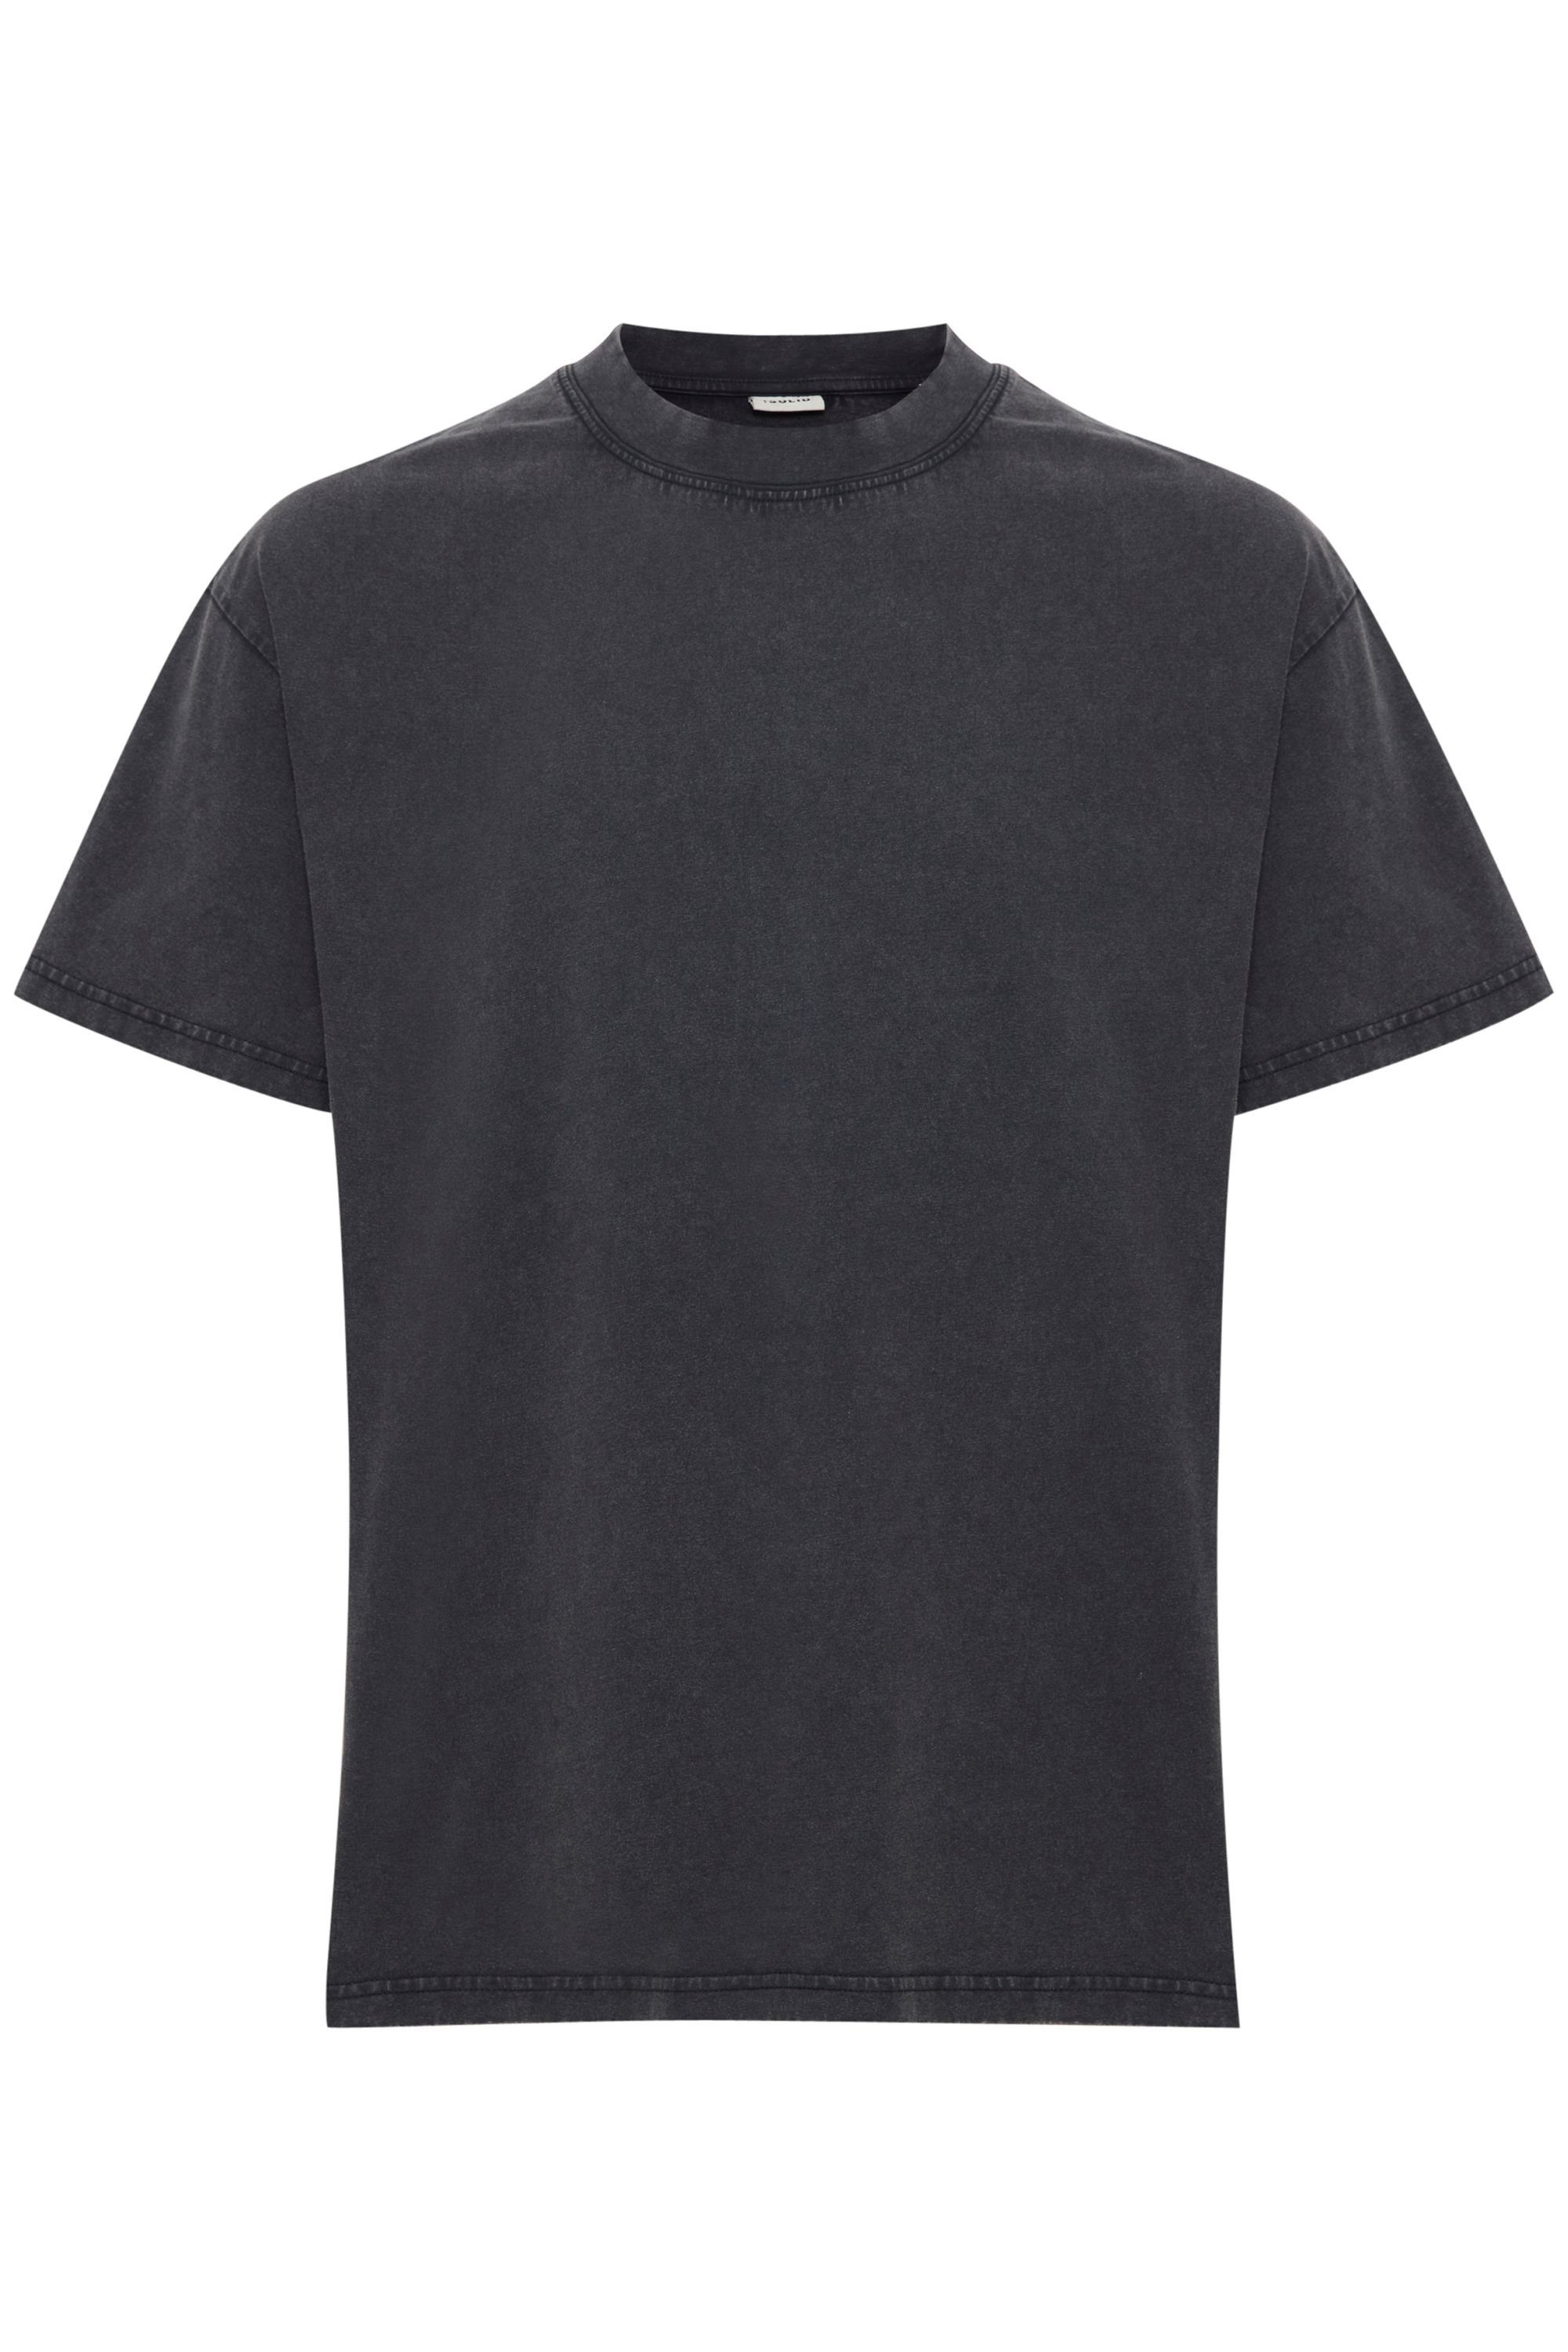 T-Shirt !Solid Black (194008) SDGerlak 21107878 True -